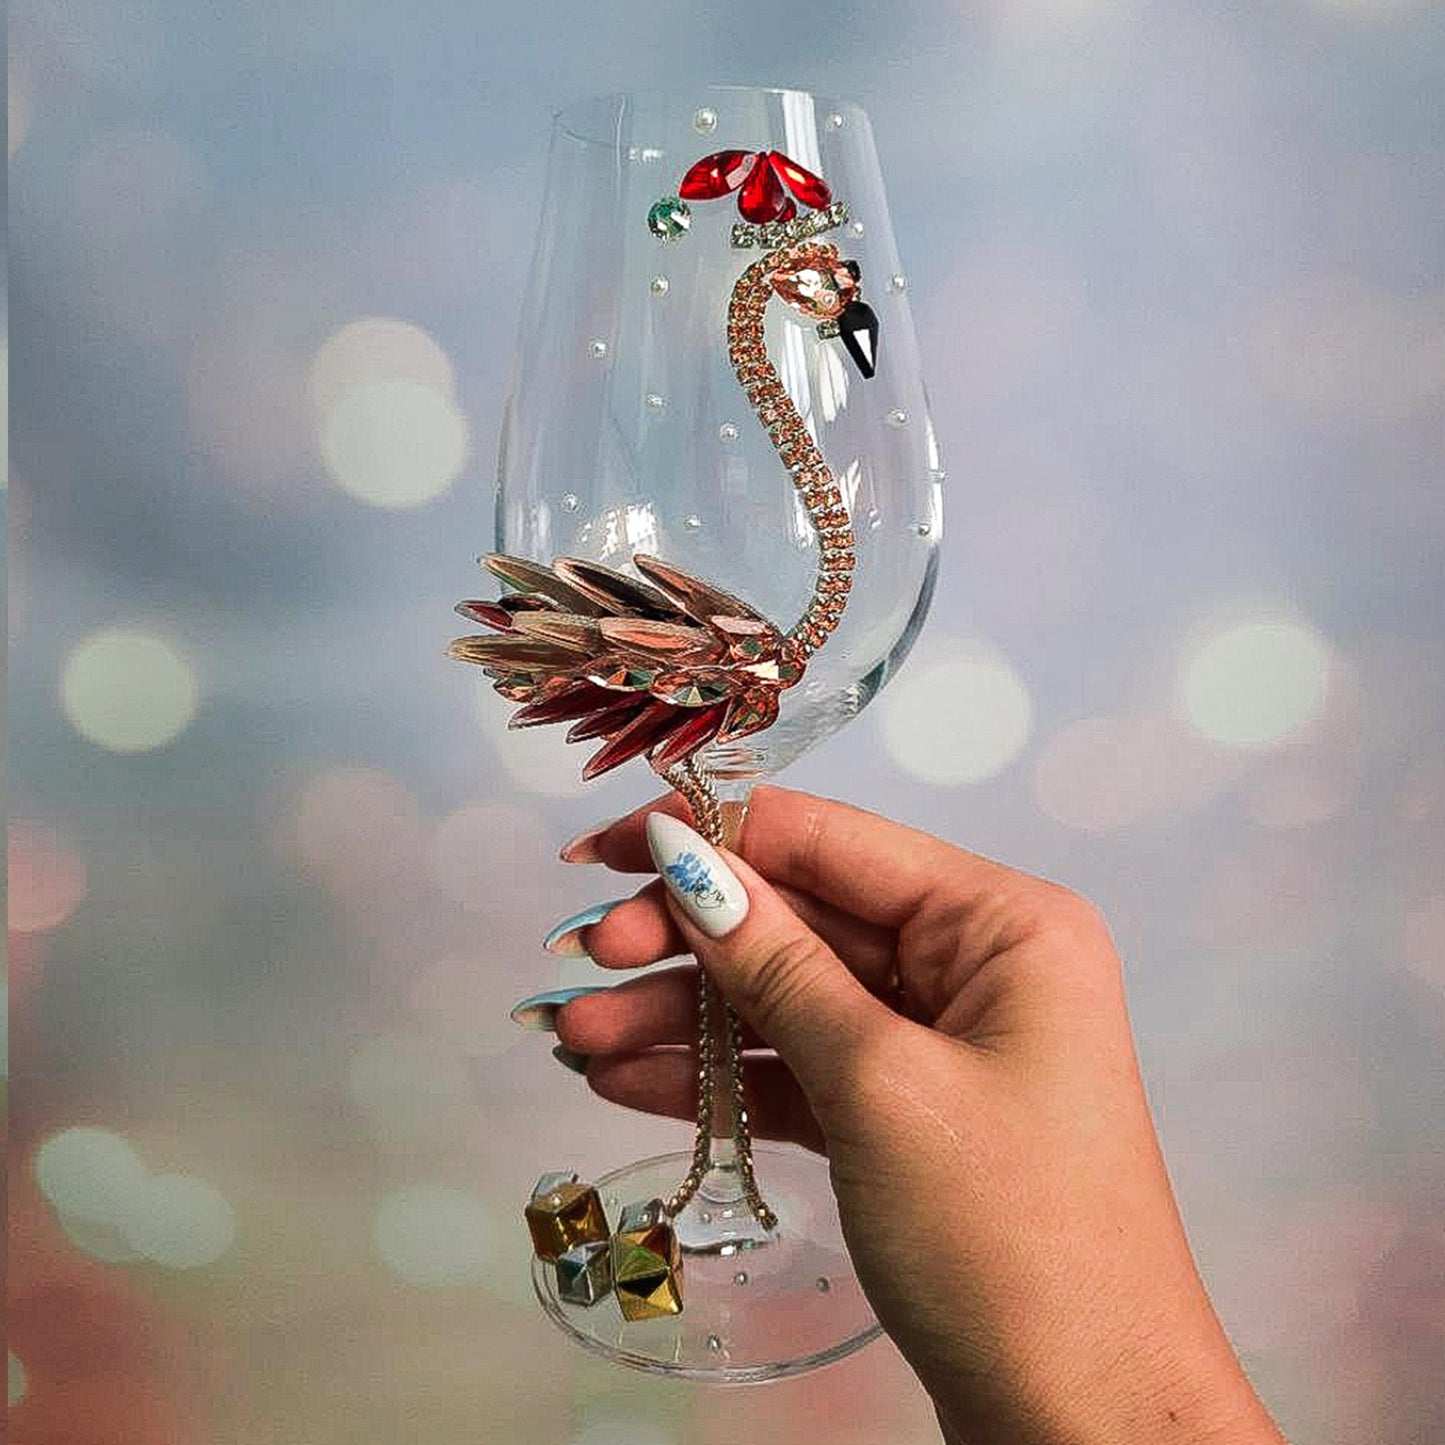 Santa-Flamingo Festive Wine Glasses with Gifts